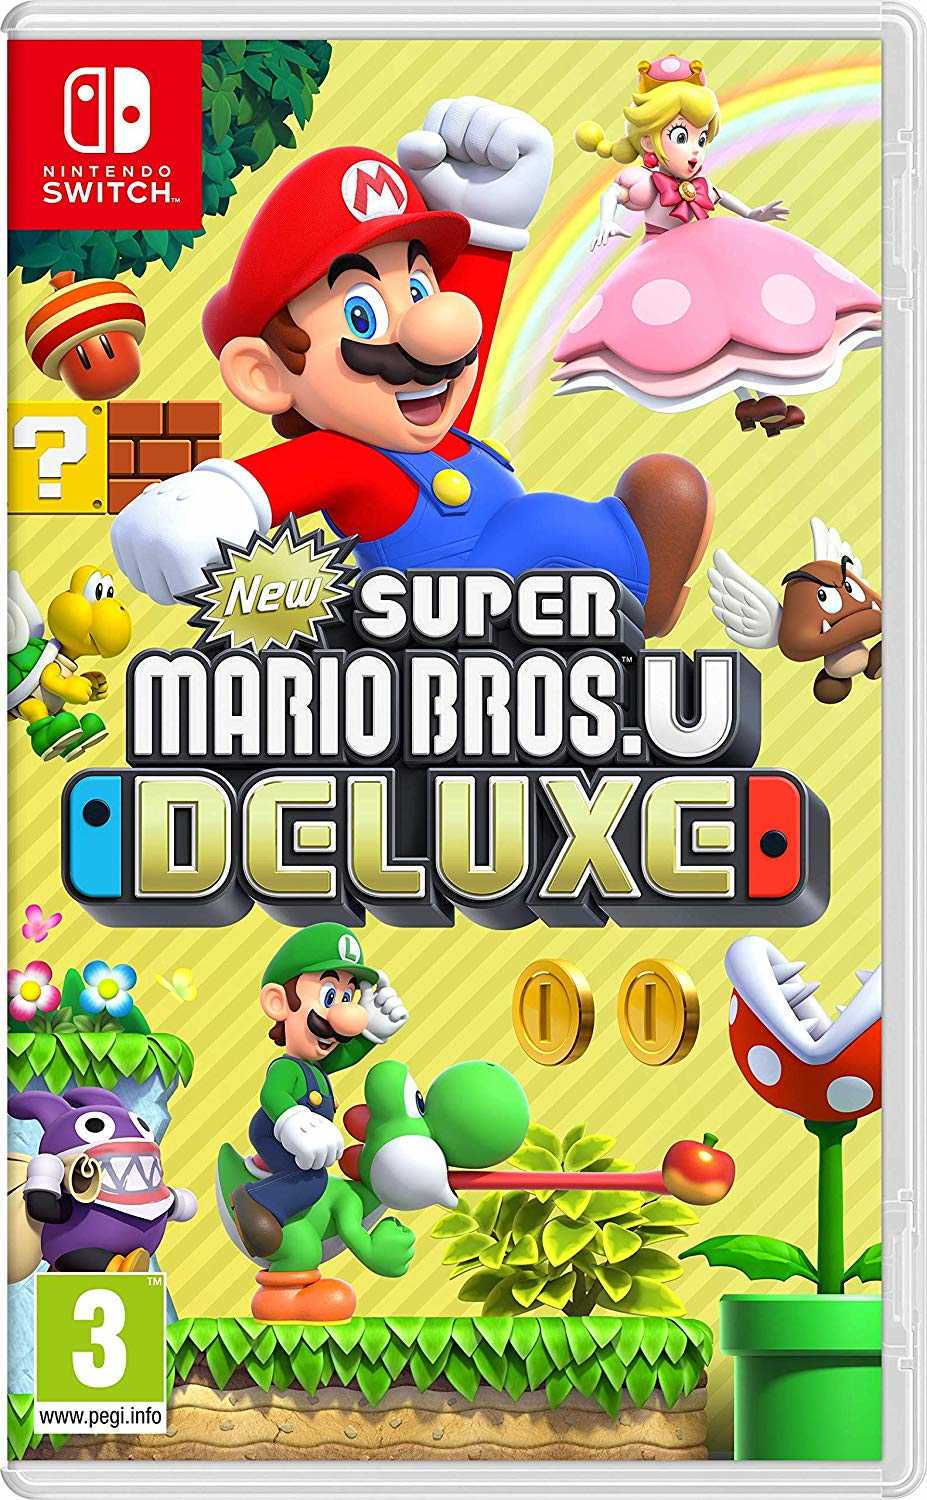 Nintendo Switch - Super Mario Bros.U DELUXE